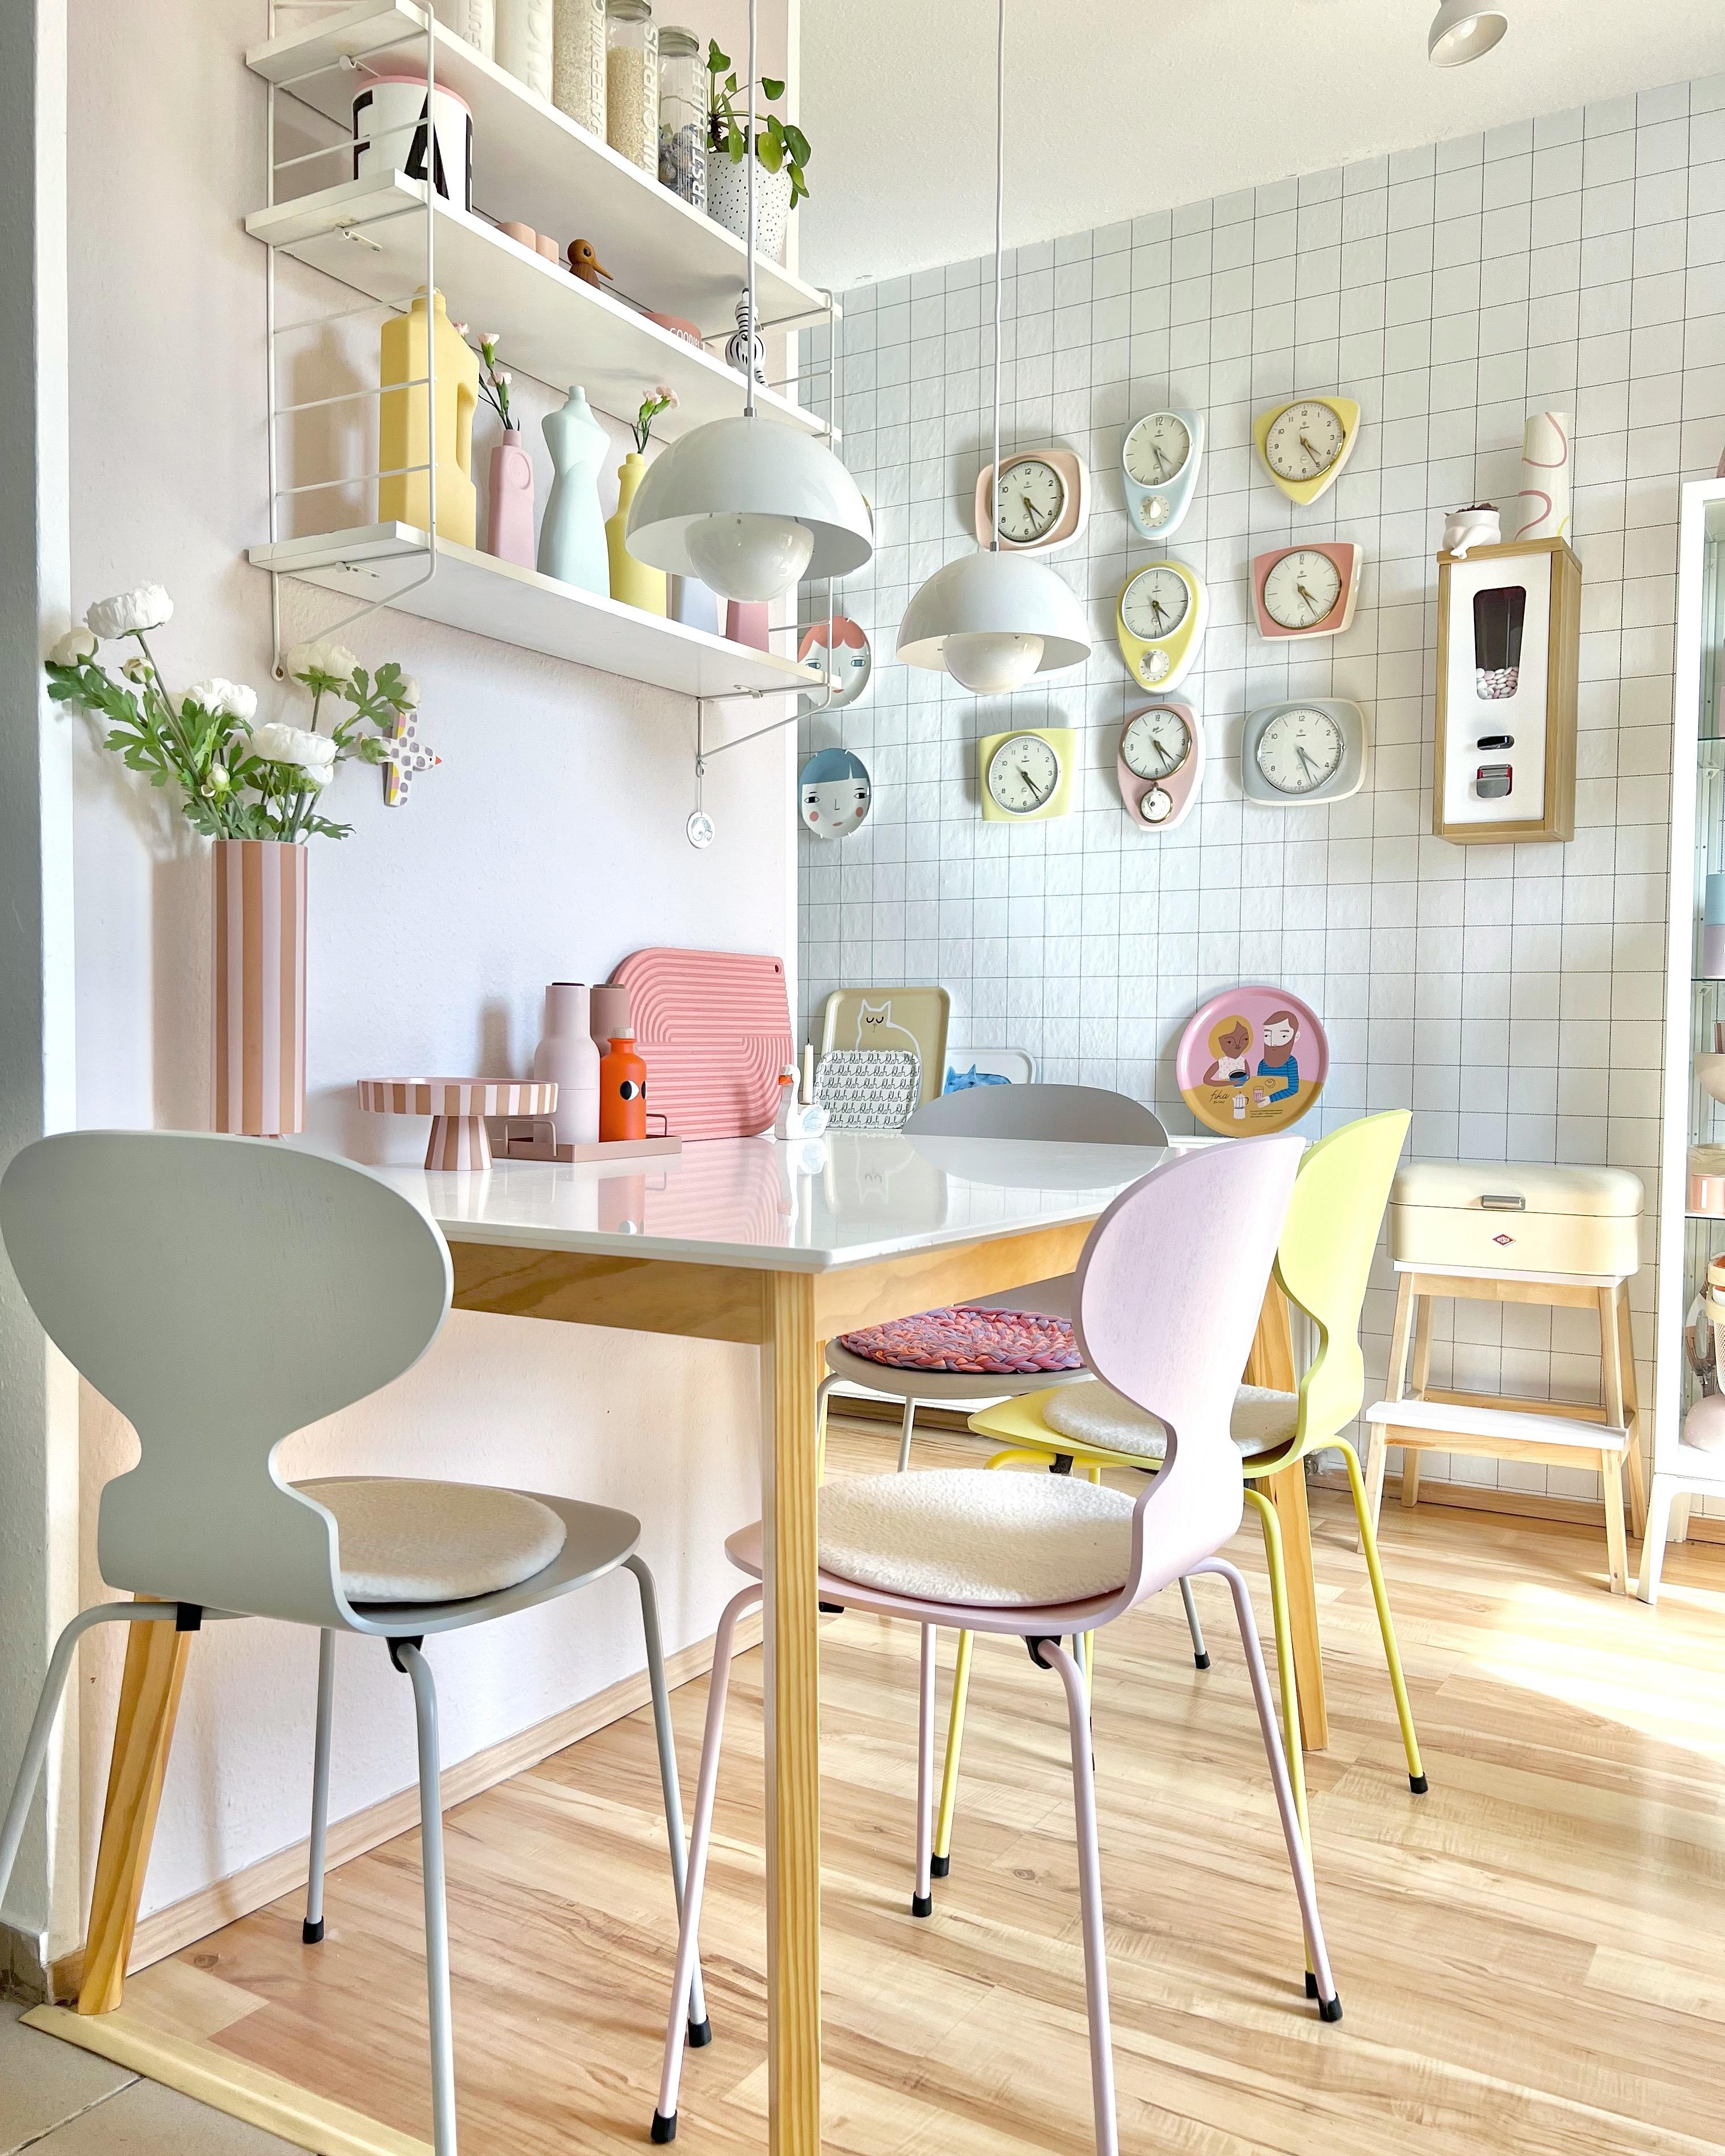 #interior #interiordesign #interiorinspo #interiorinspiration #kitcheninspo #colourfulkitchen #vintage #pastell